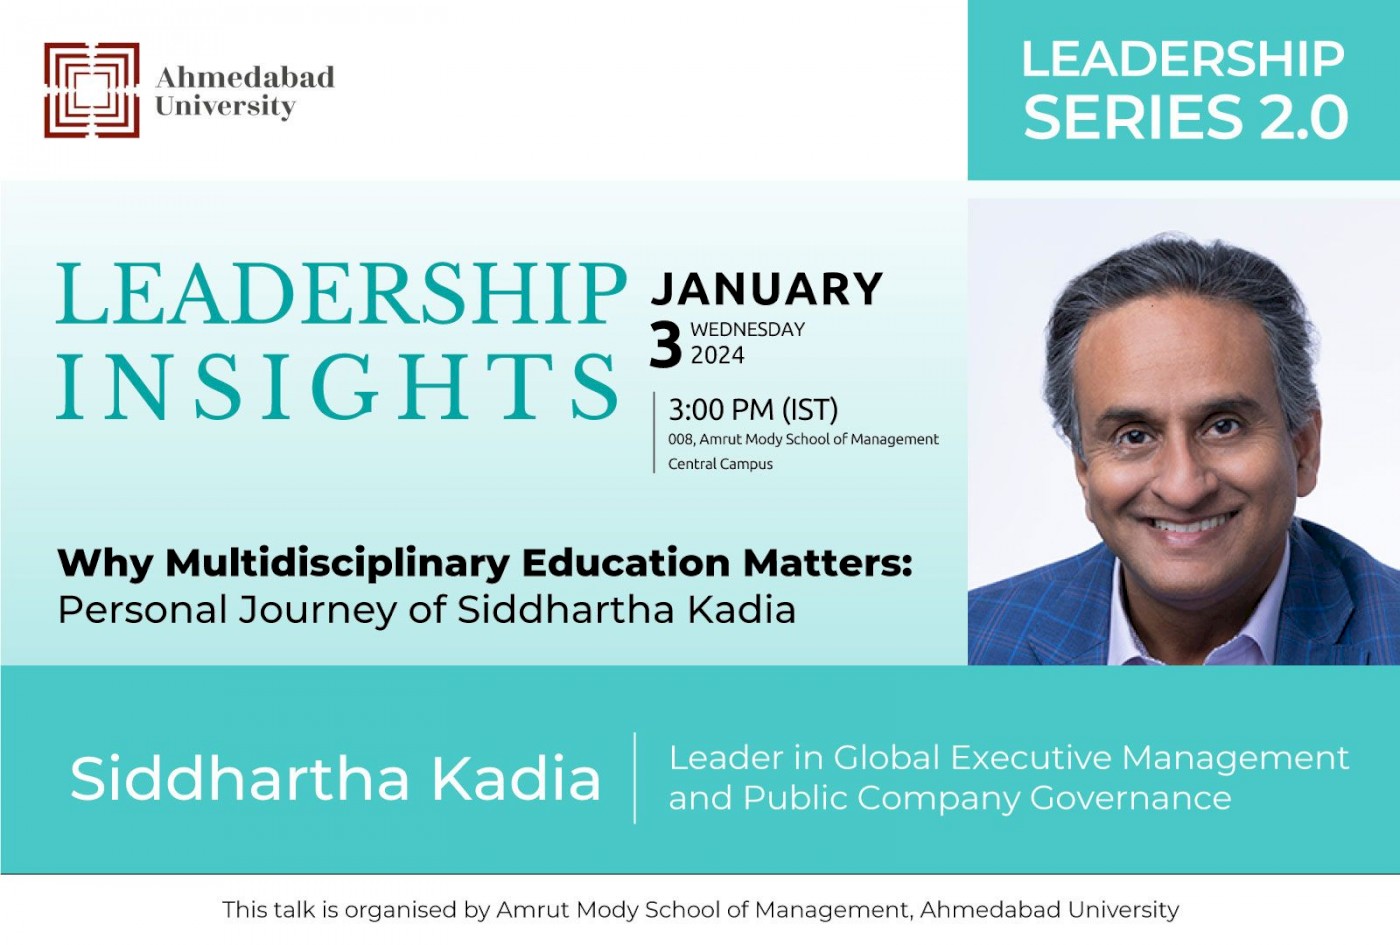 Why Multidisciplinary Education Matters: Personal Journey of Siddhartha Kadia